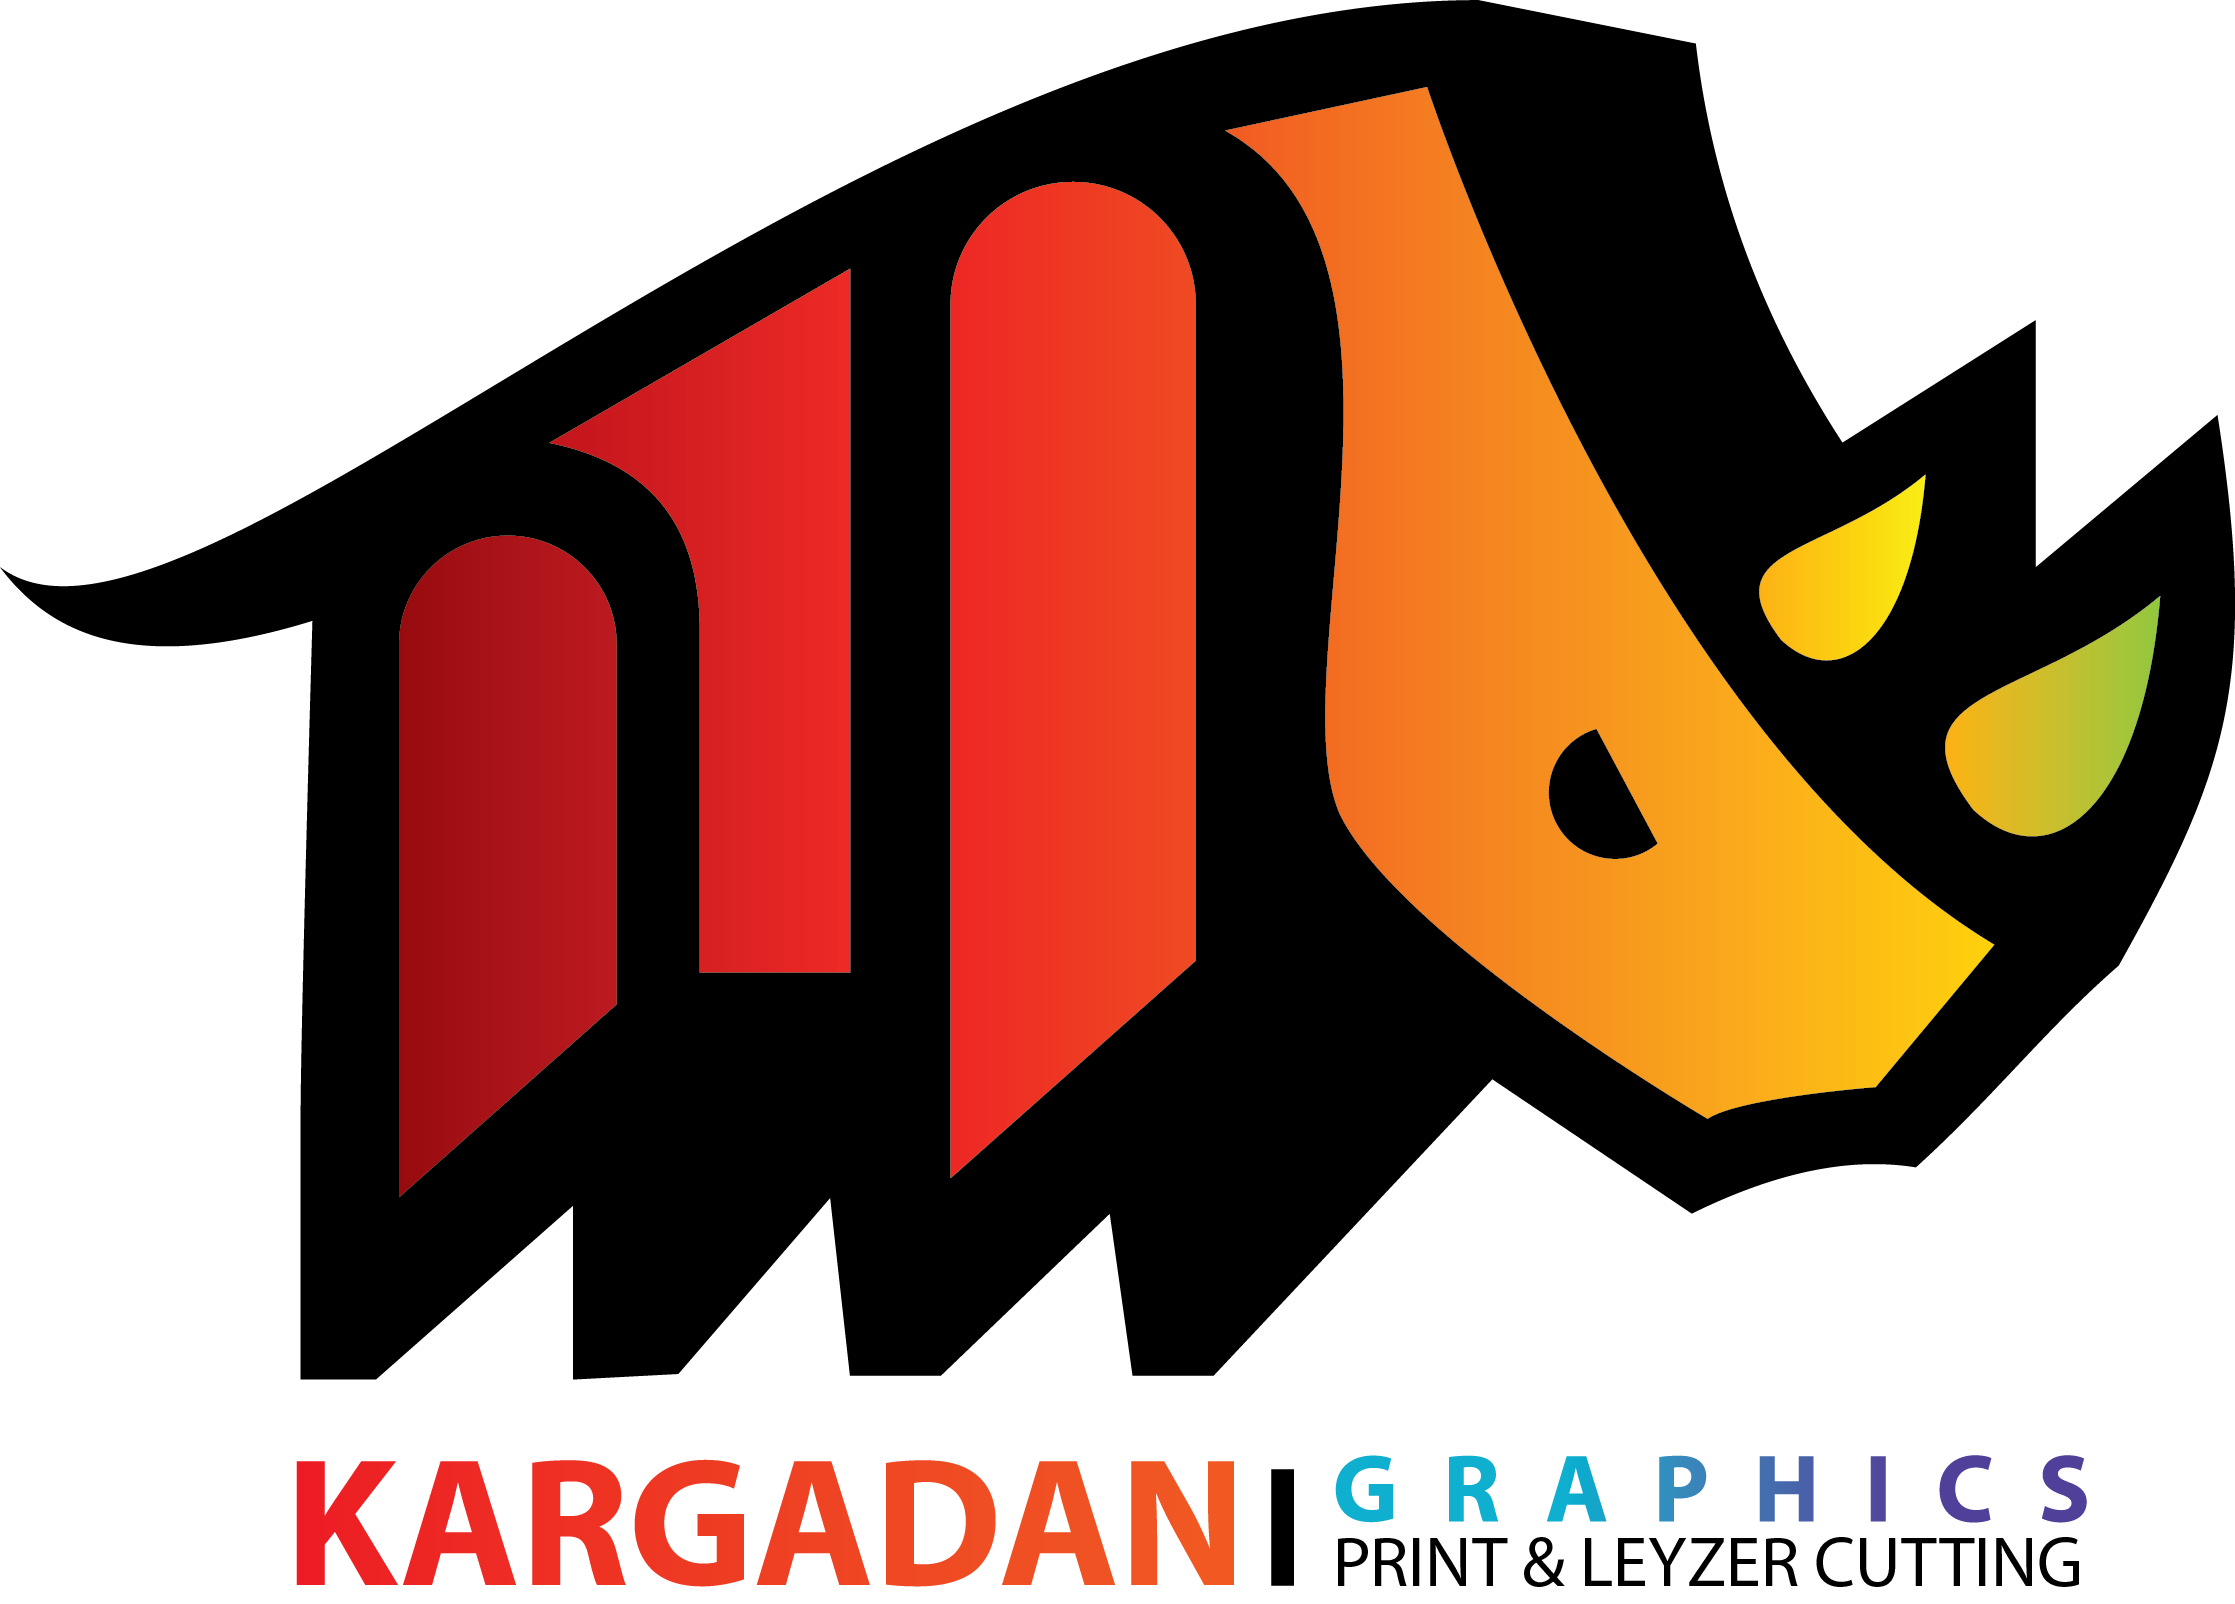 KARGADAN-GRAPHICS-THE LOGO.png